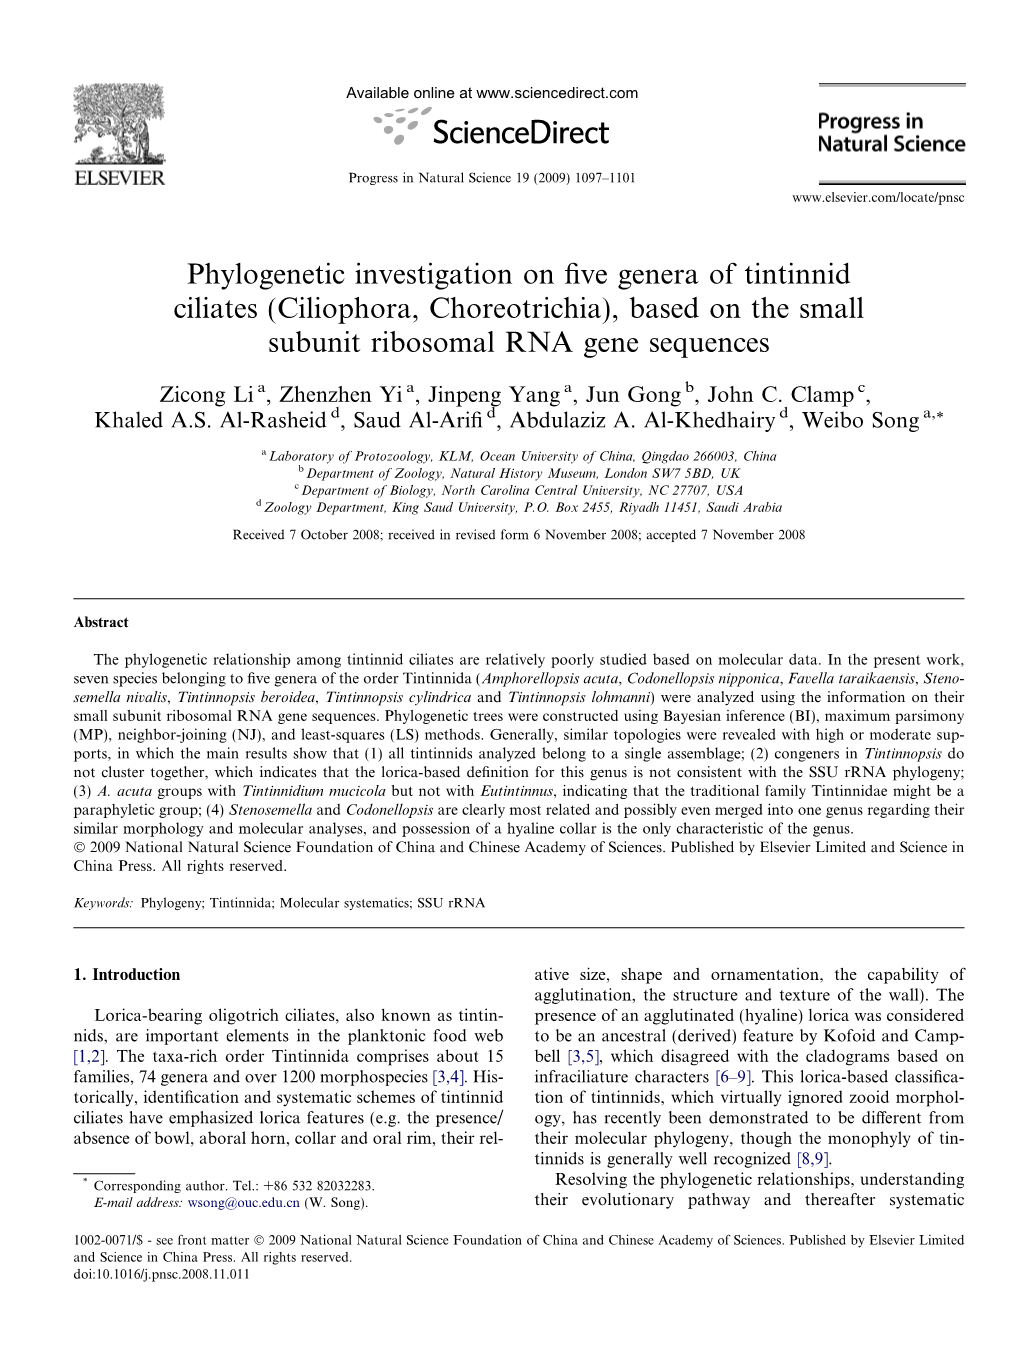 Phylogenetic Investigation on Five Genera of Tintinnid Ciliates